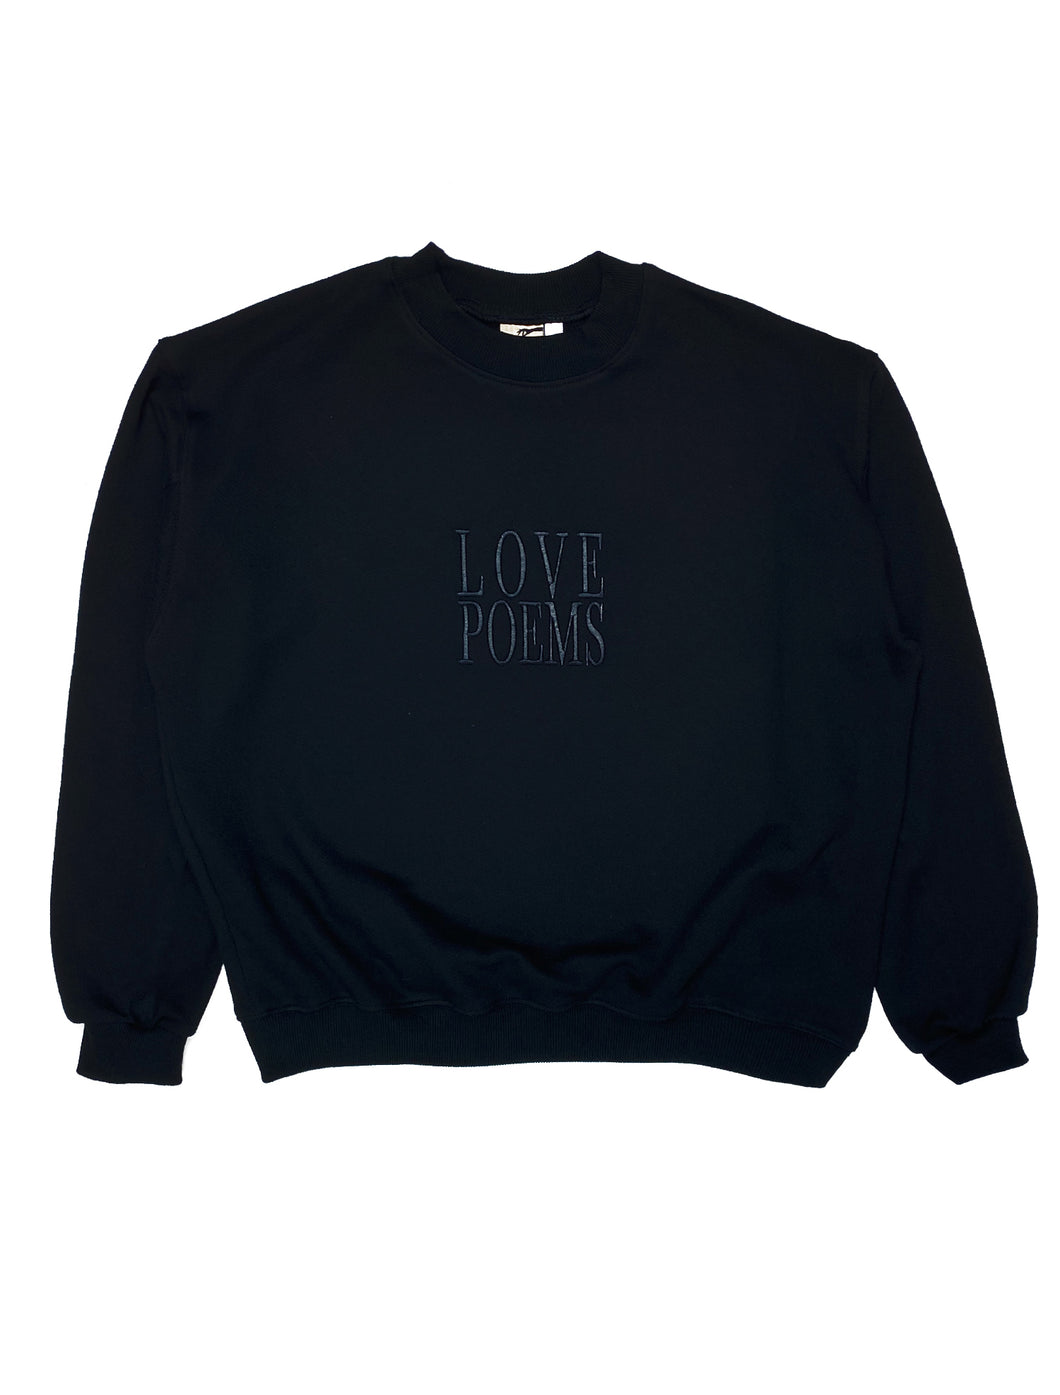 LOVE POEMS sweatshirt